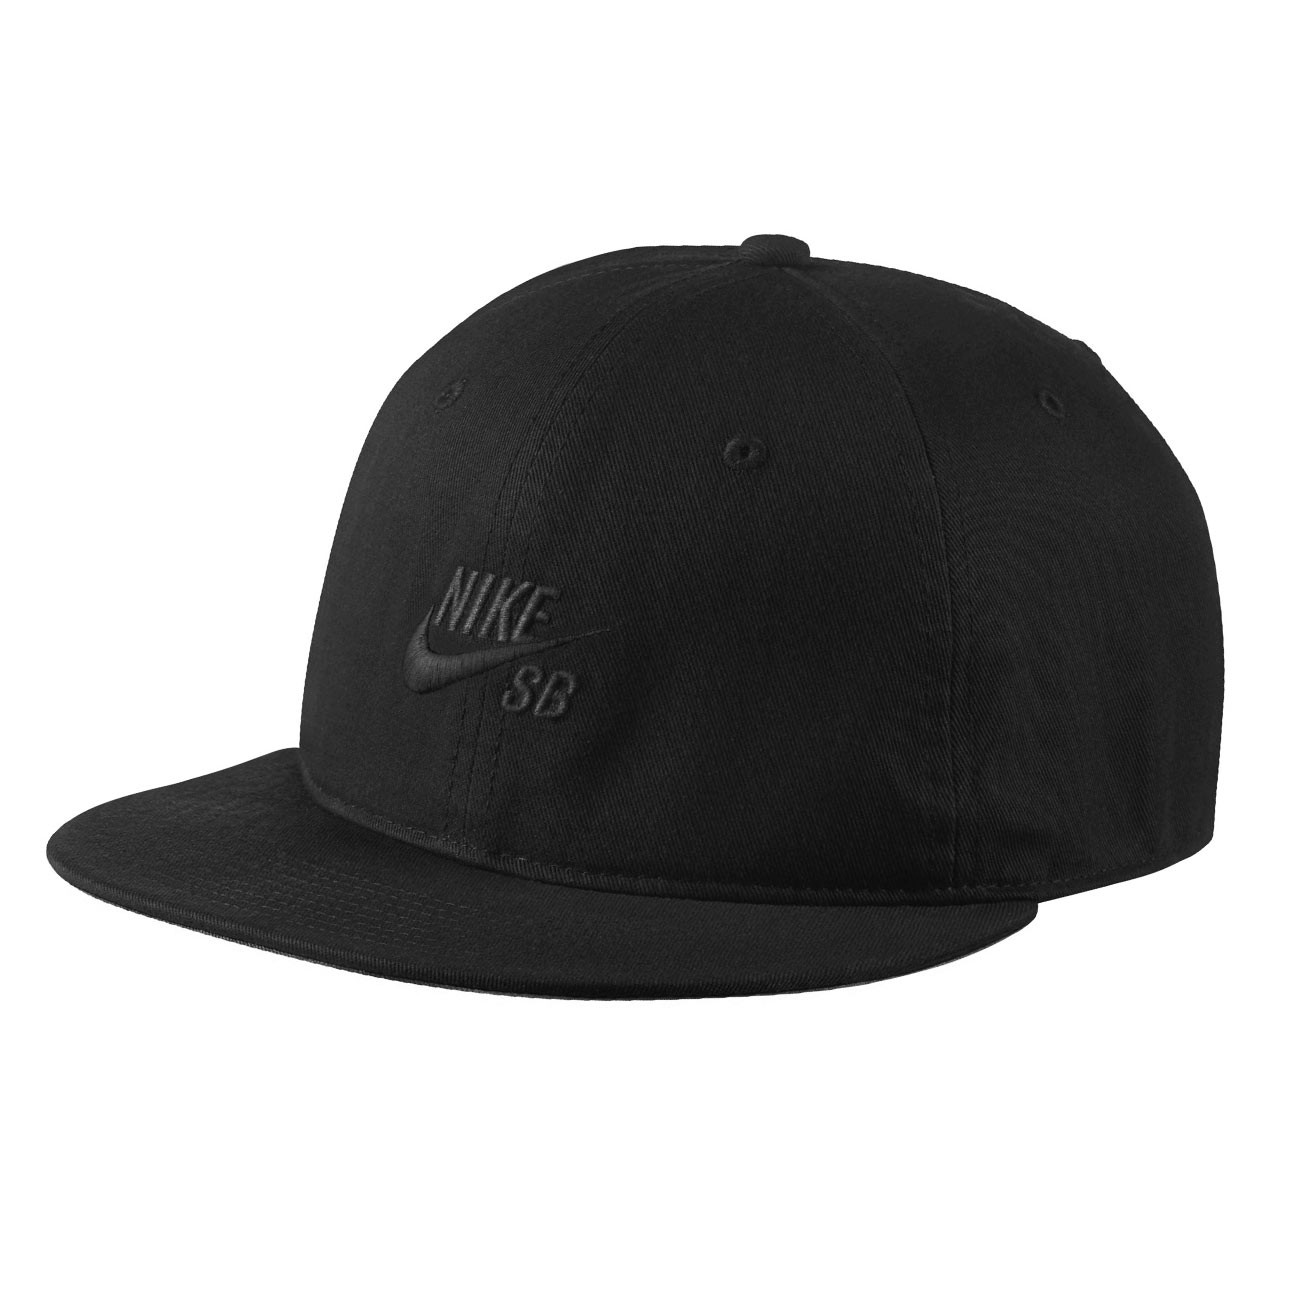 Cap Nike SB Pro Vintage black/pine green/black/black | Snowboard Zezula